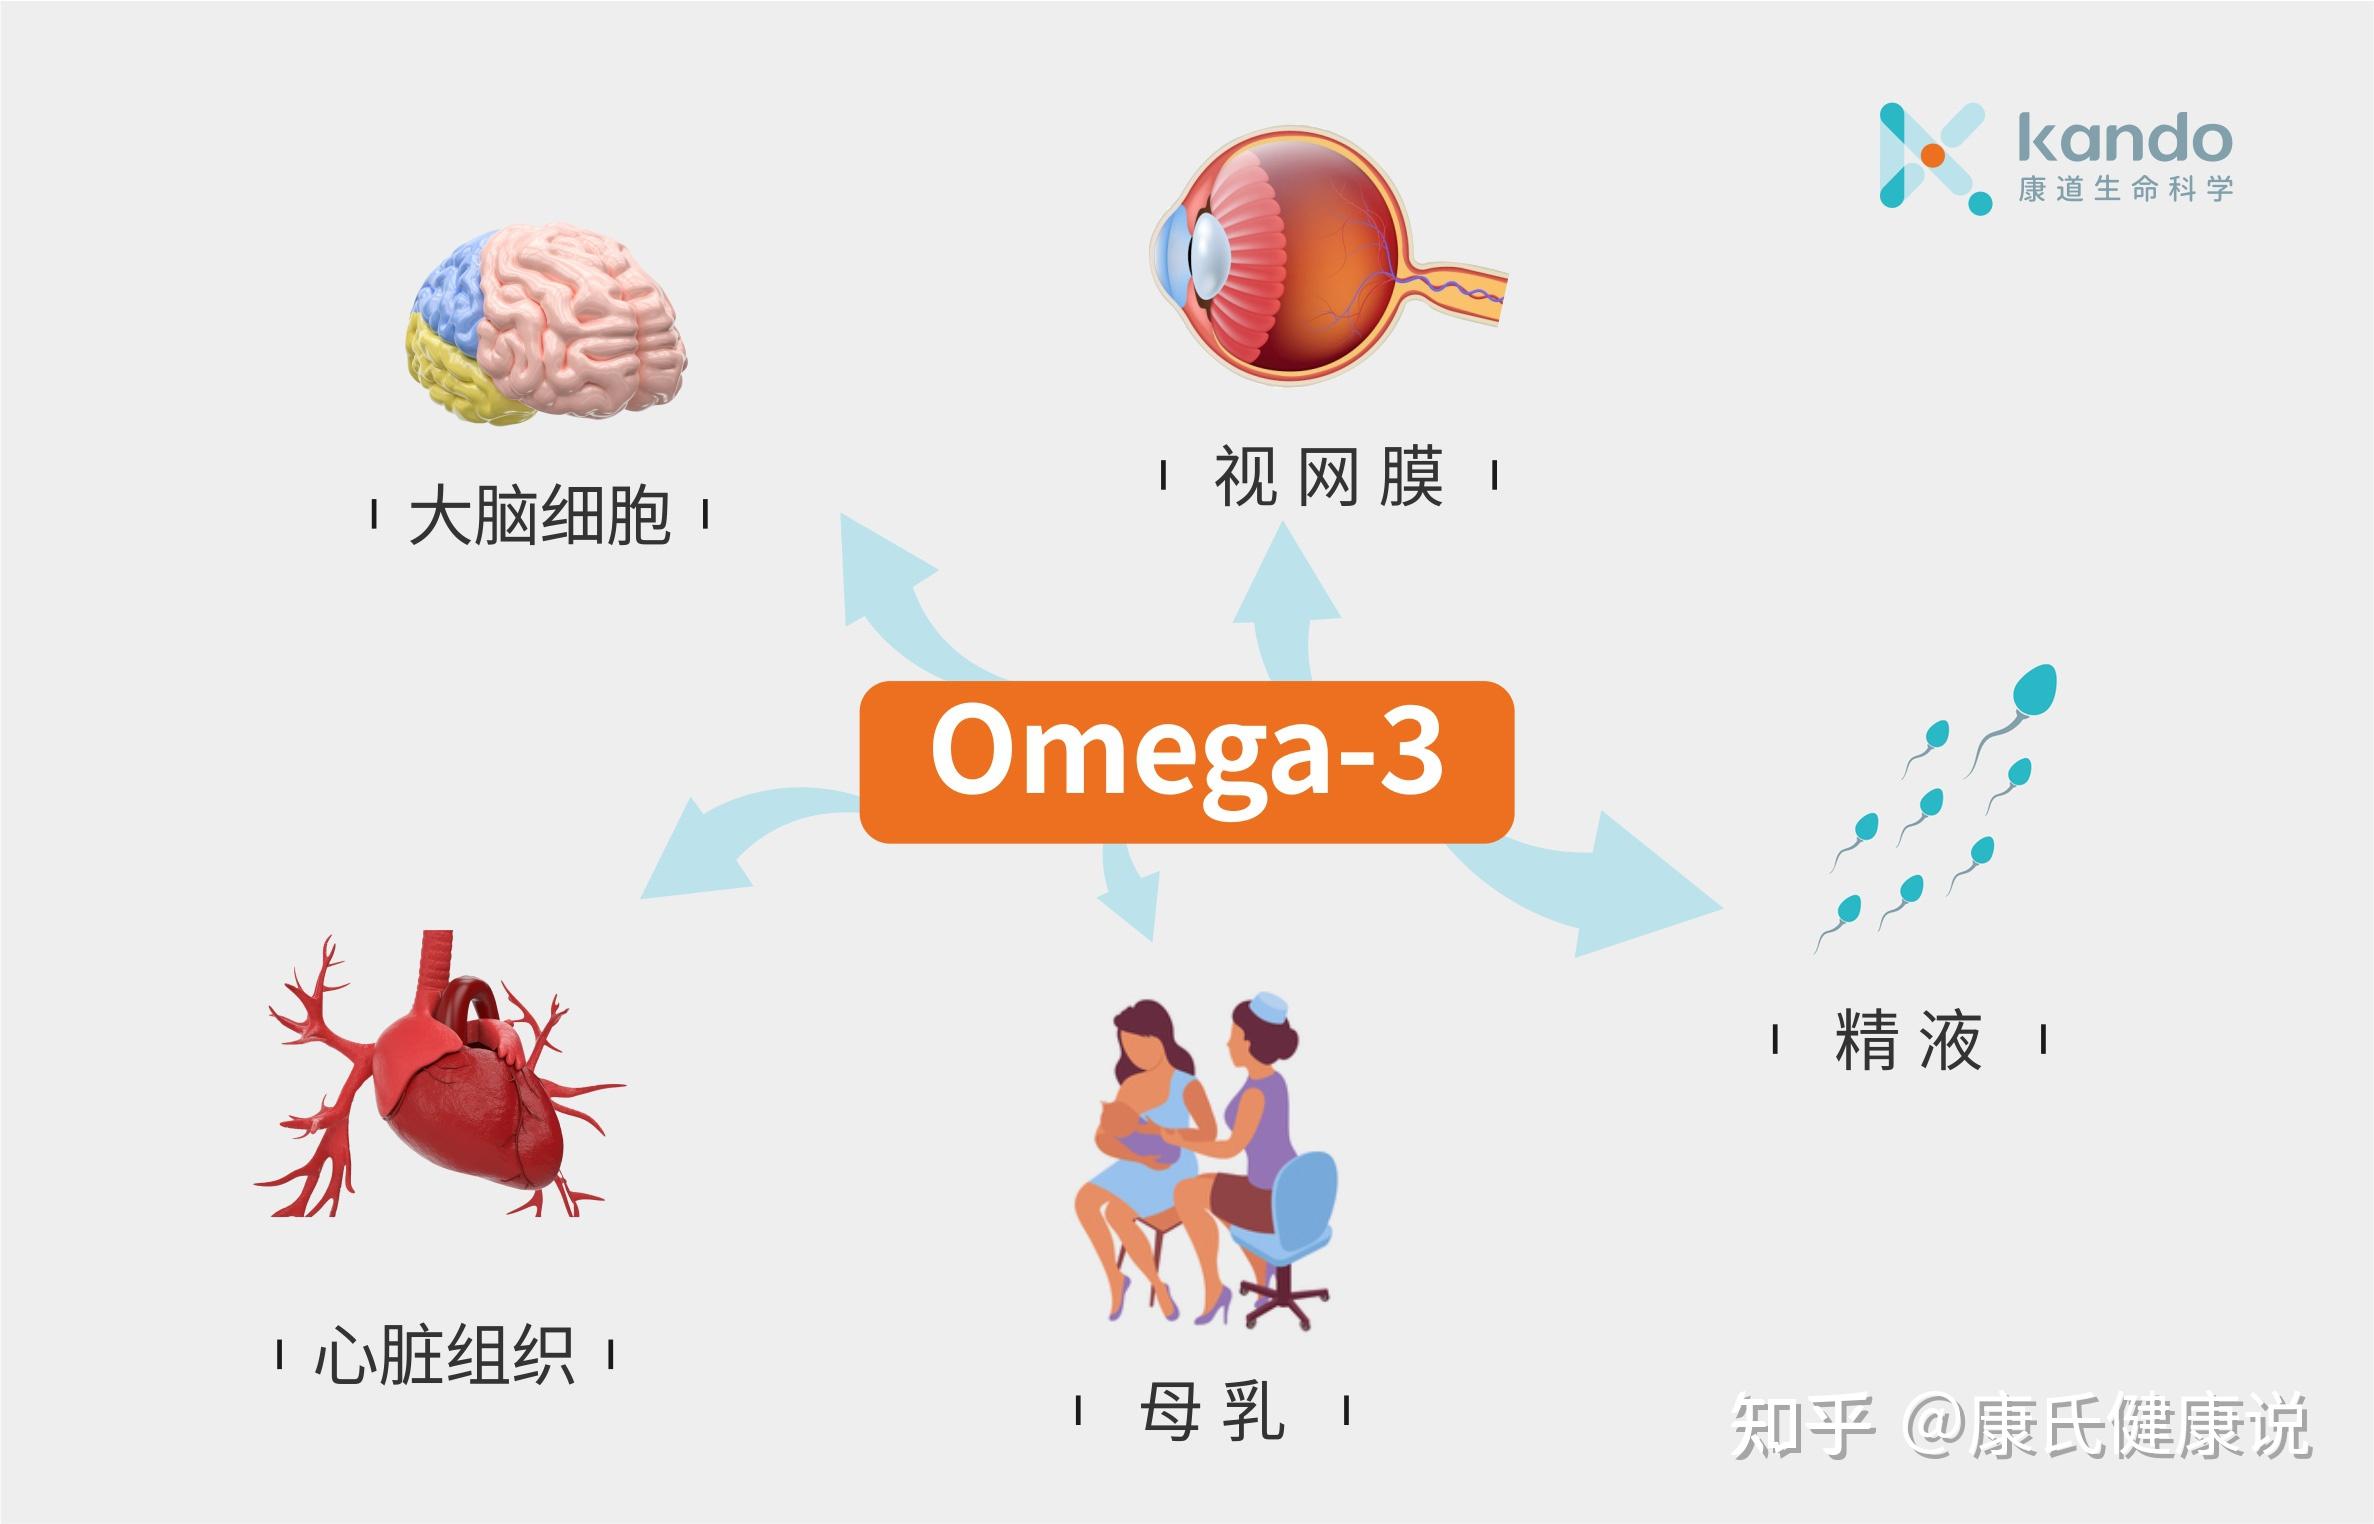 omega-3与omega-6比例失衡严重会促进炎症引发